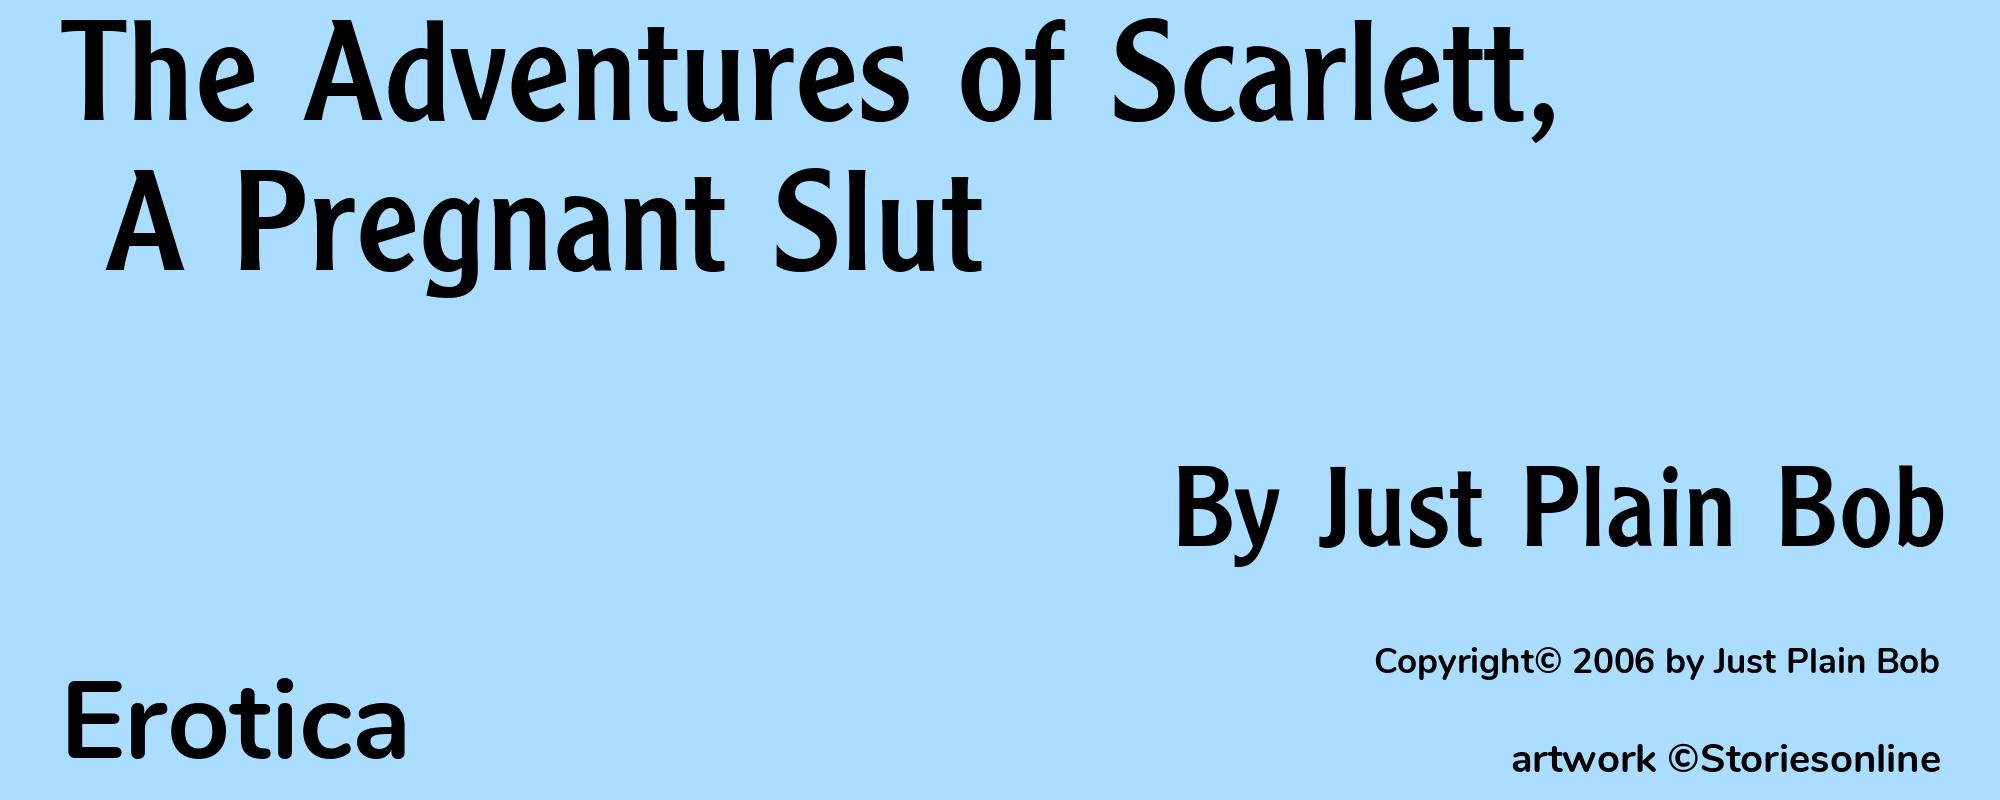 The Adventures of Scarlett, A Pregnant Slut - Cover